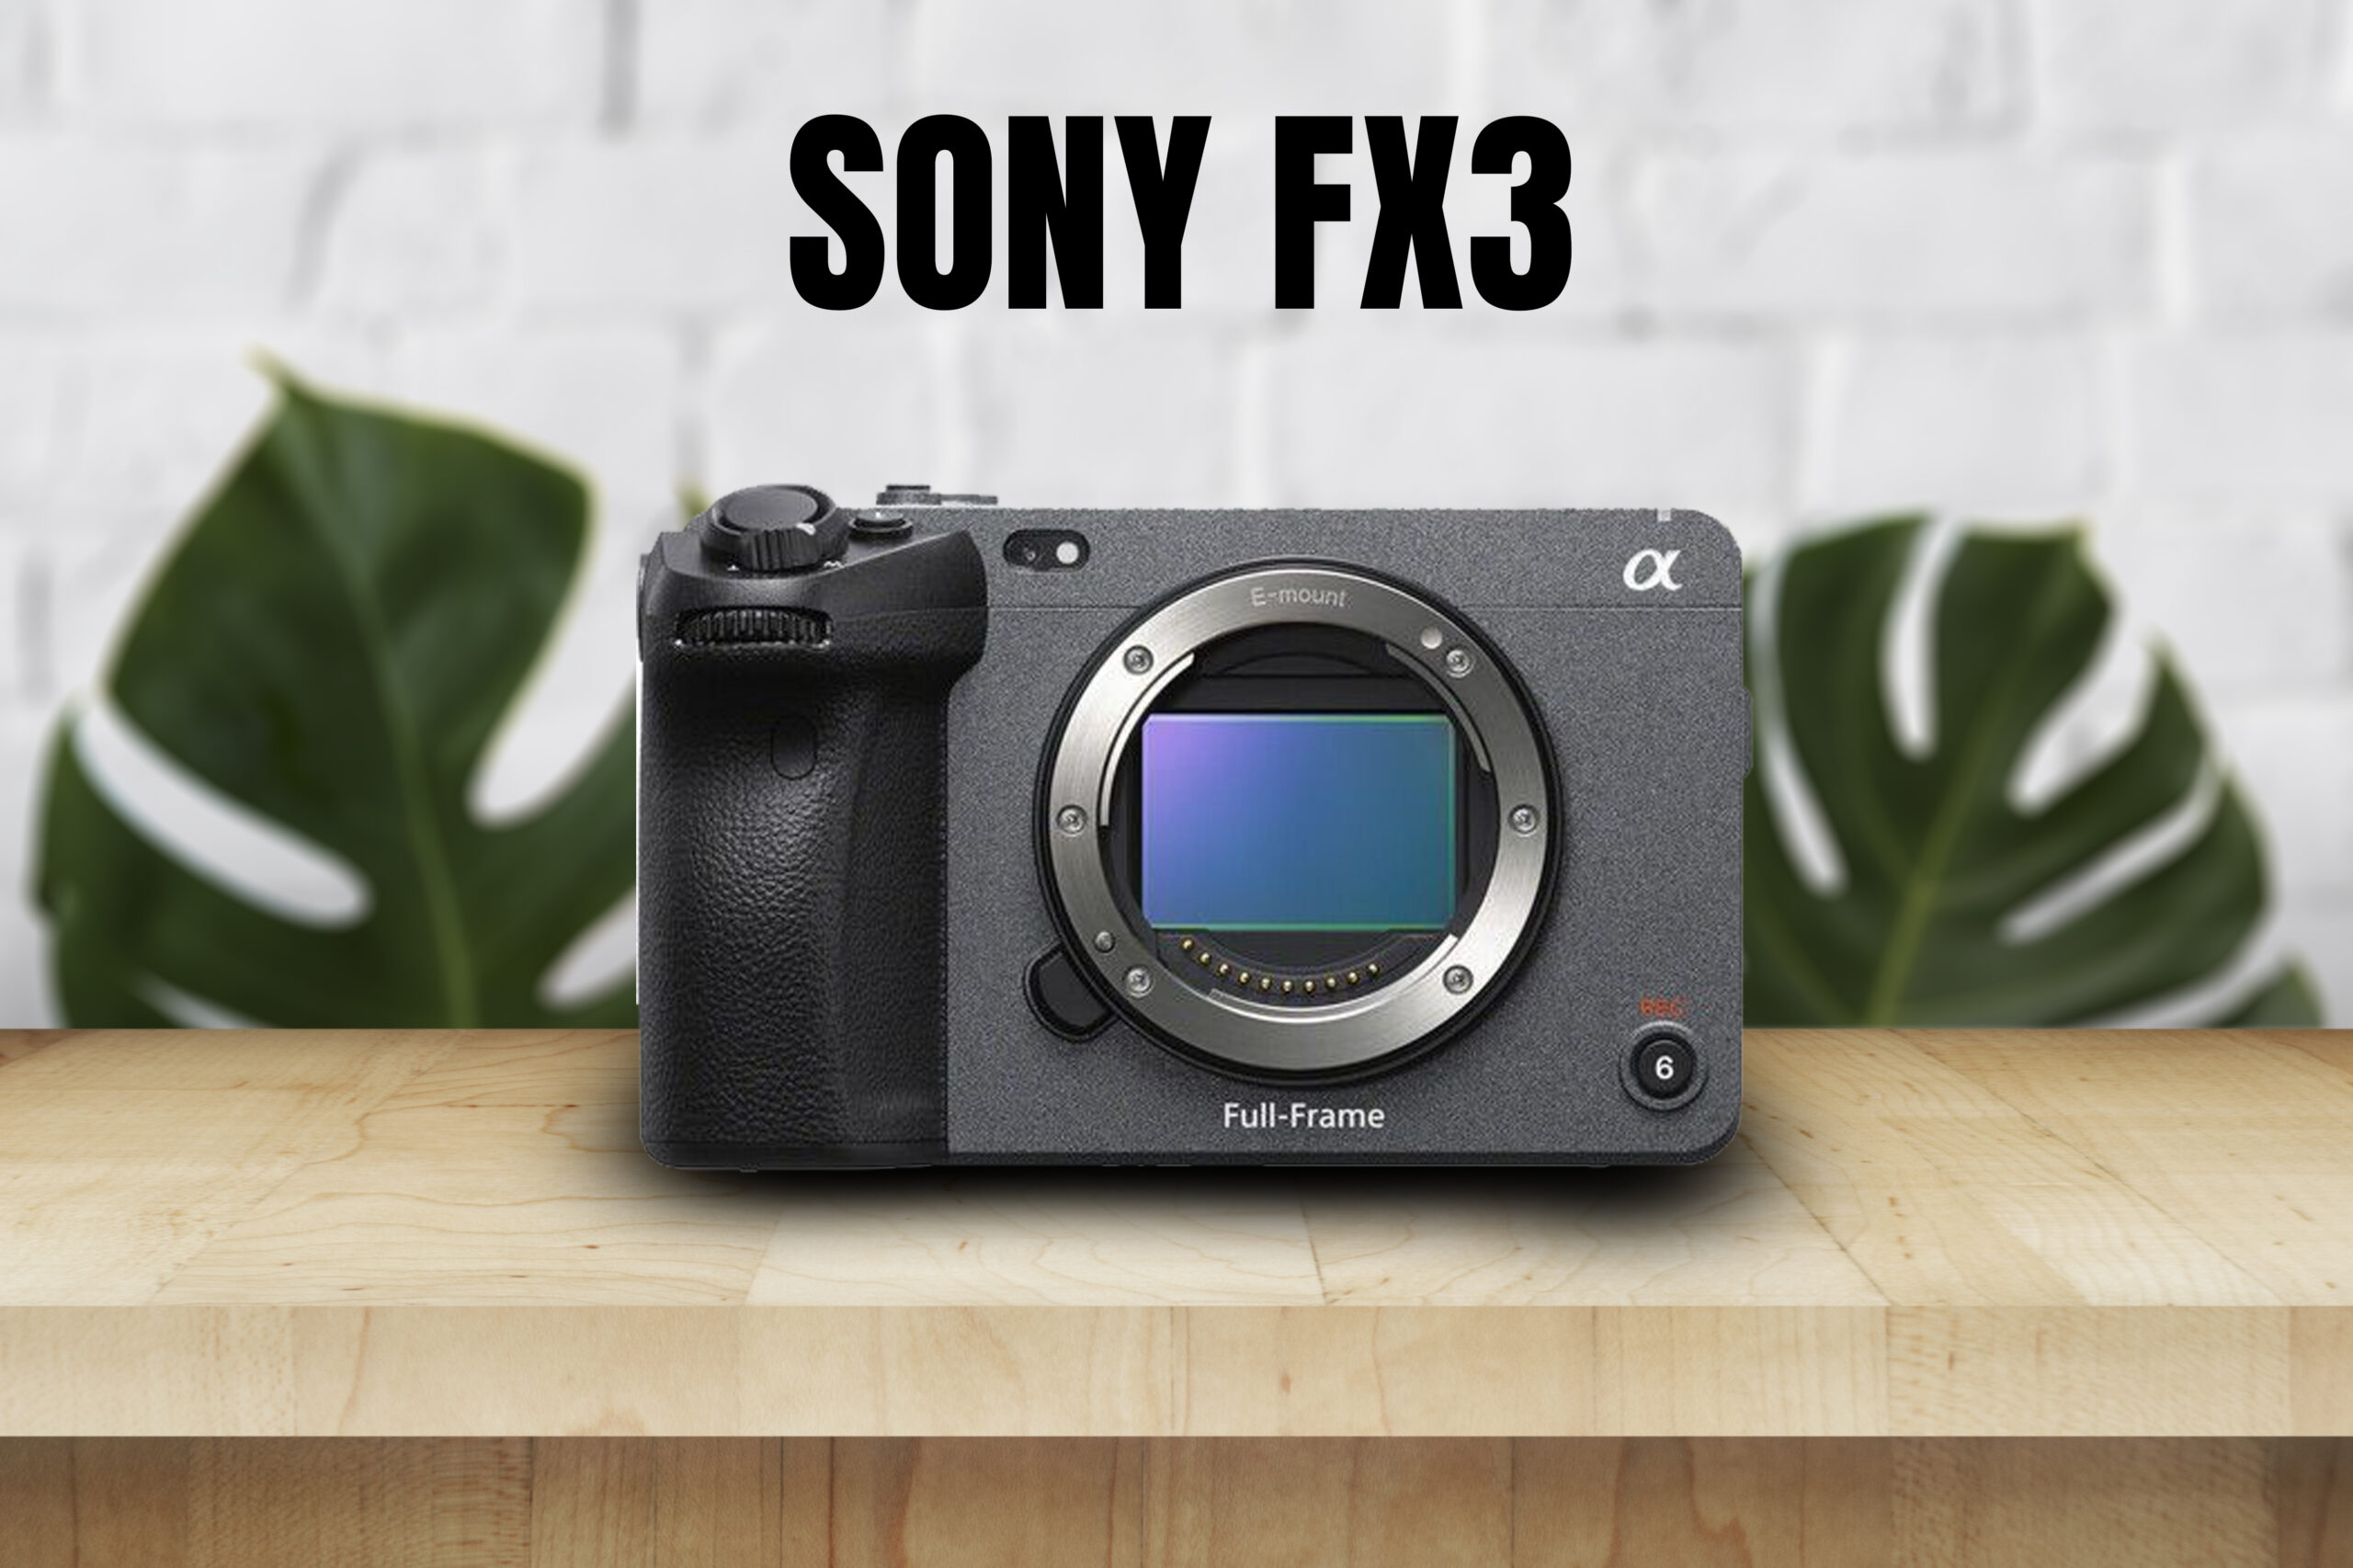 Sony fx3